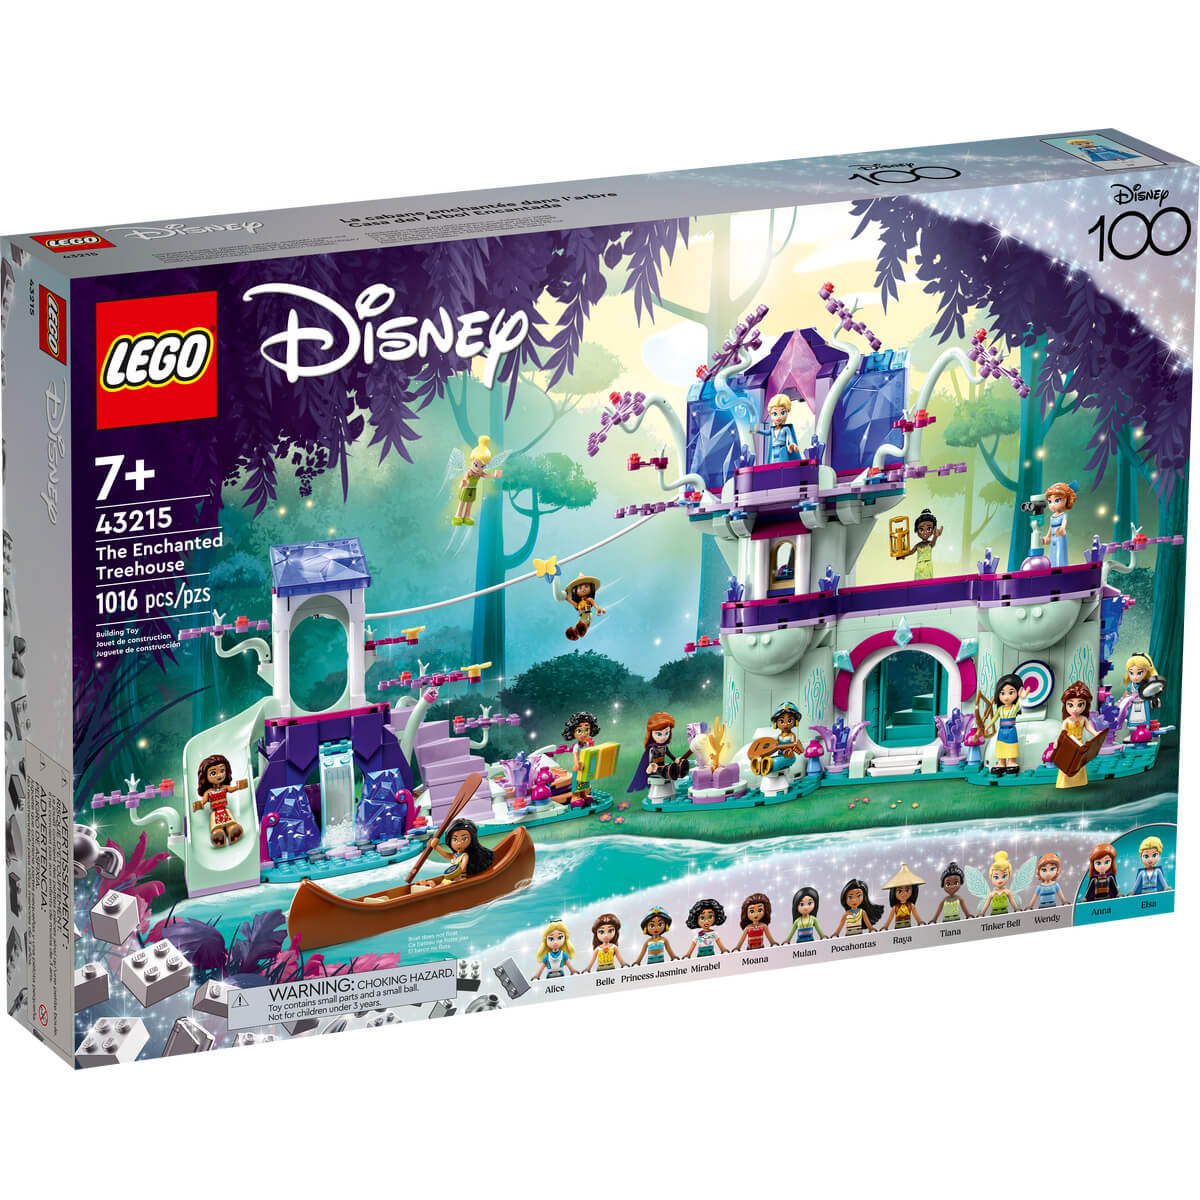 LEGO® Disney Classic The Enchanted Treehouse 1016 Piece Building Set (43215)